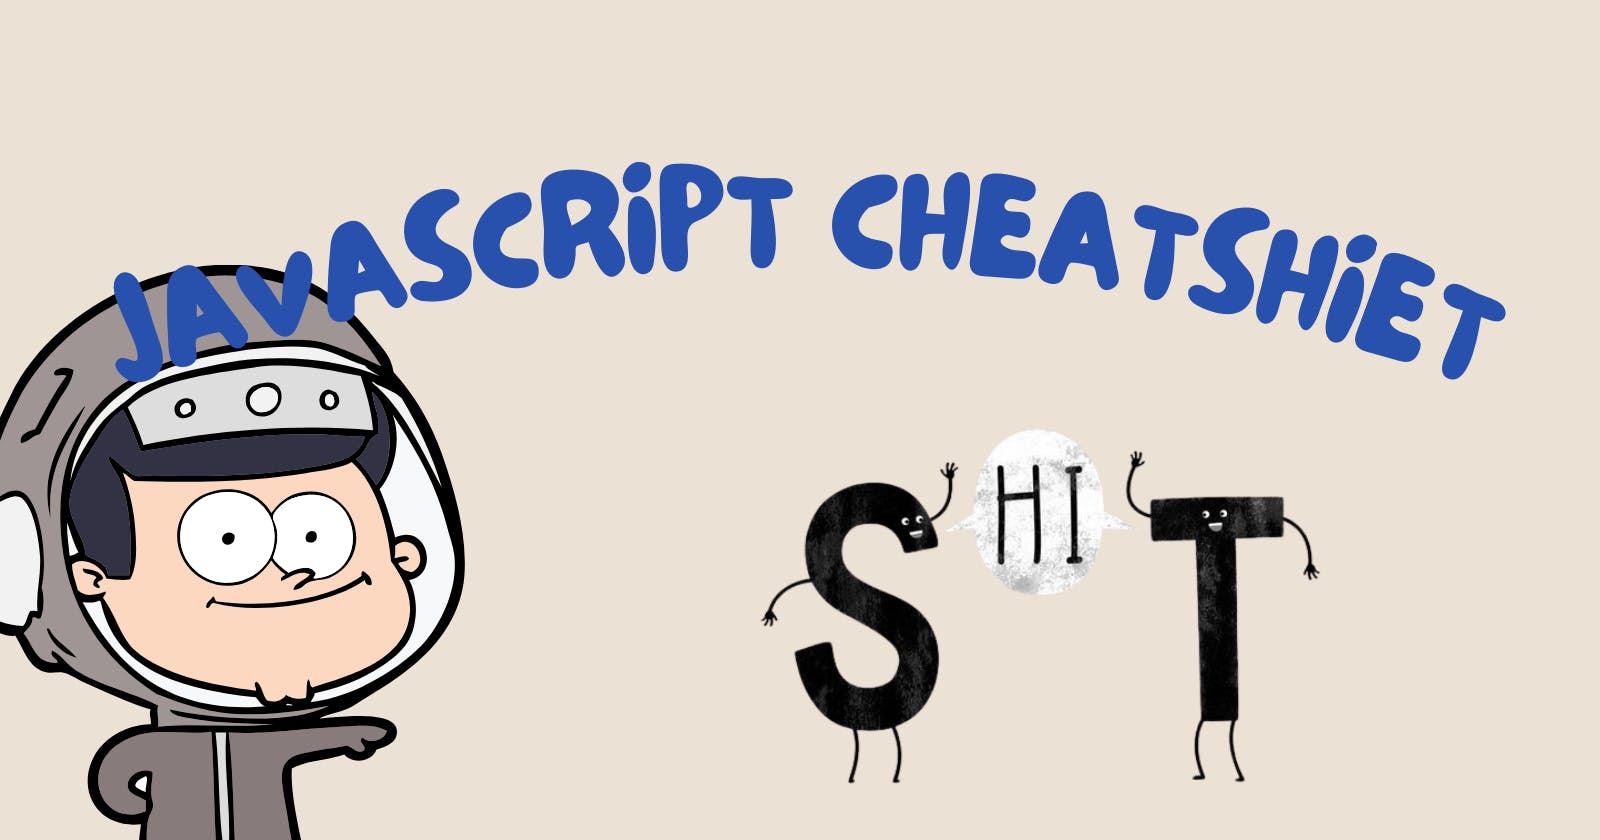 My cheat-shiet Javascript